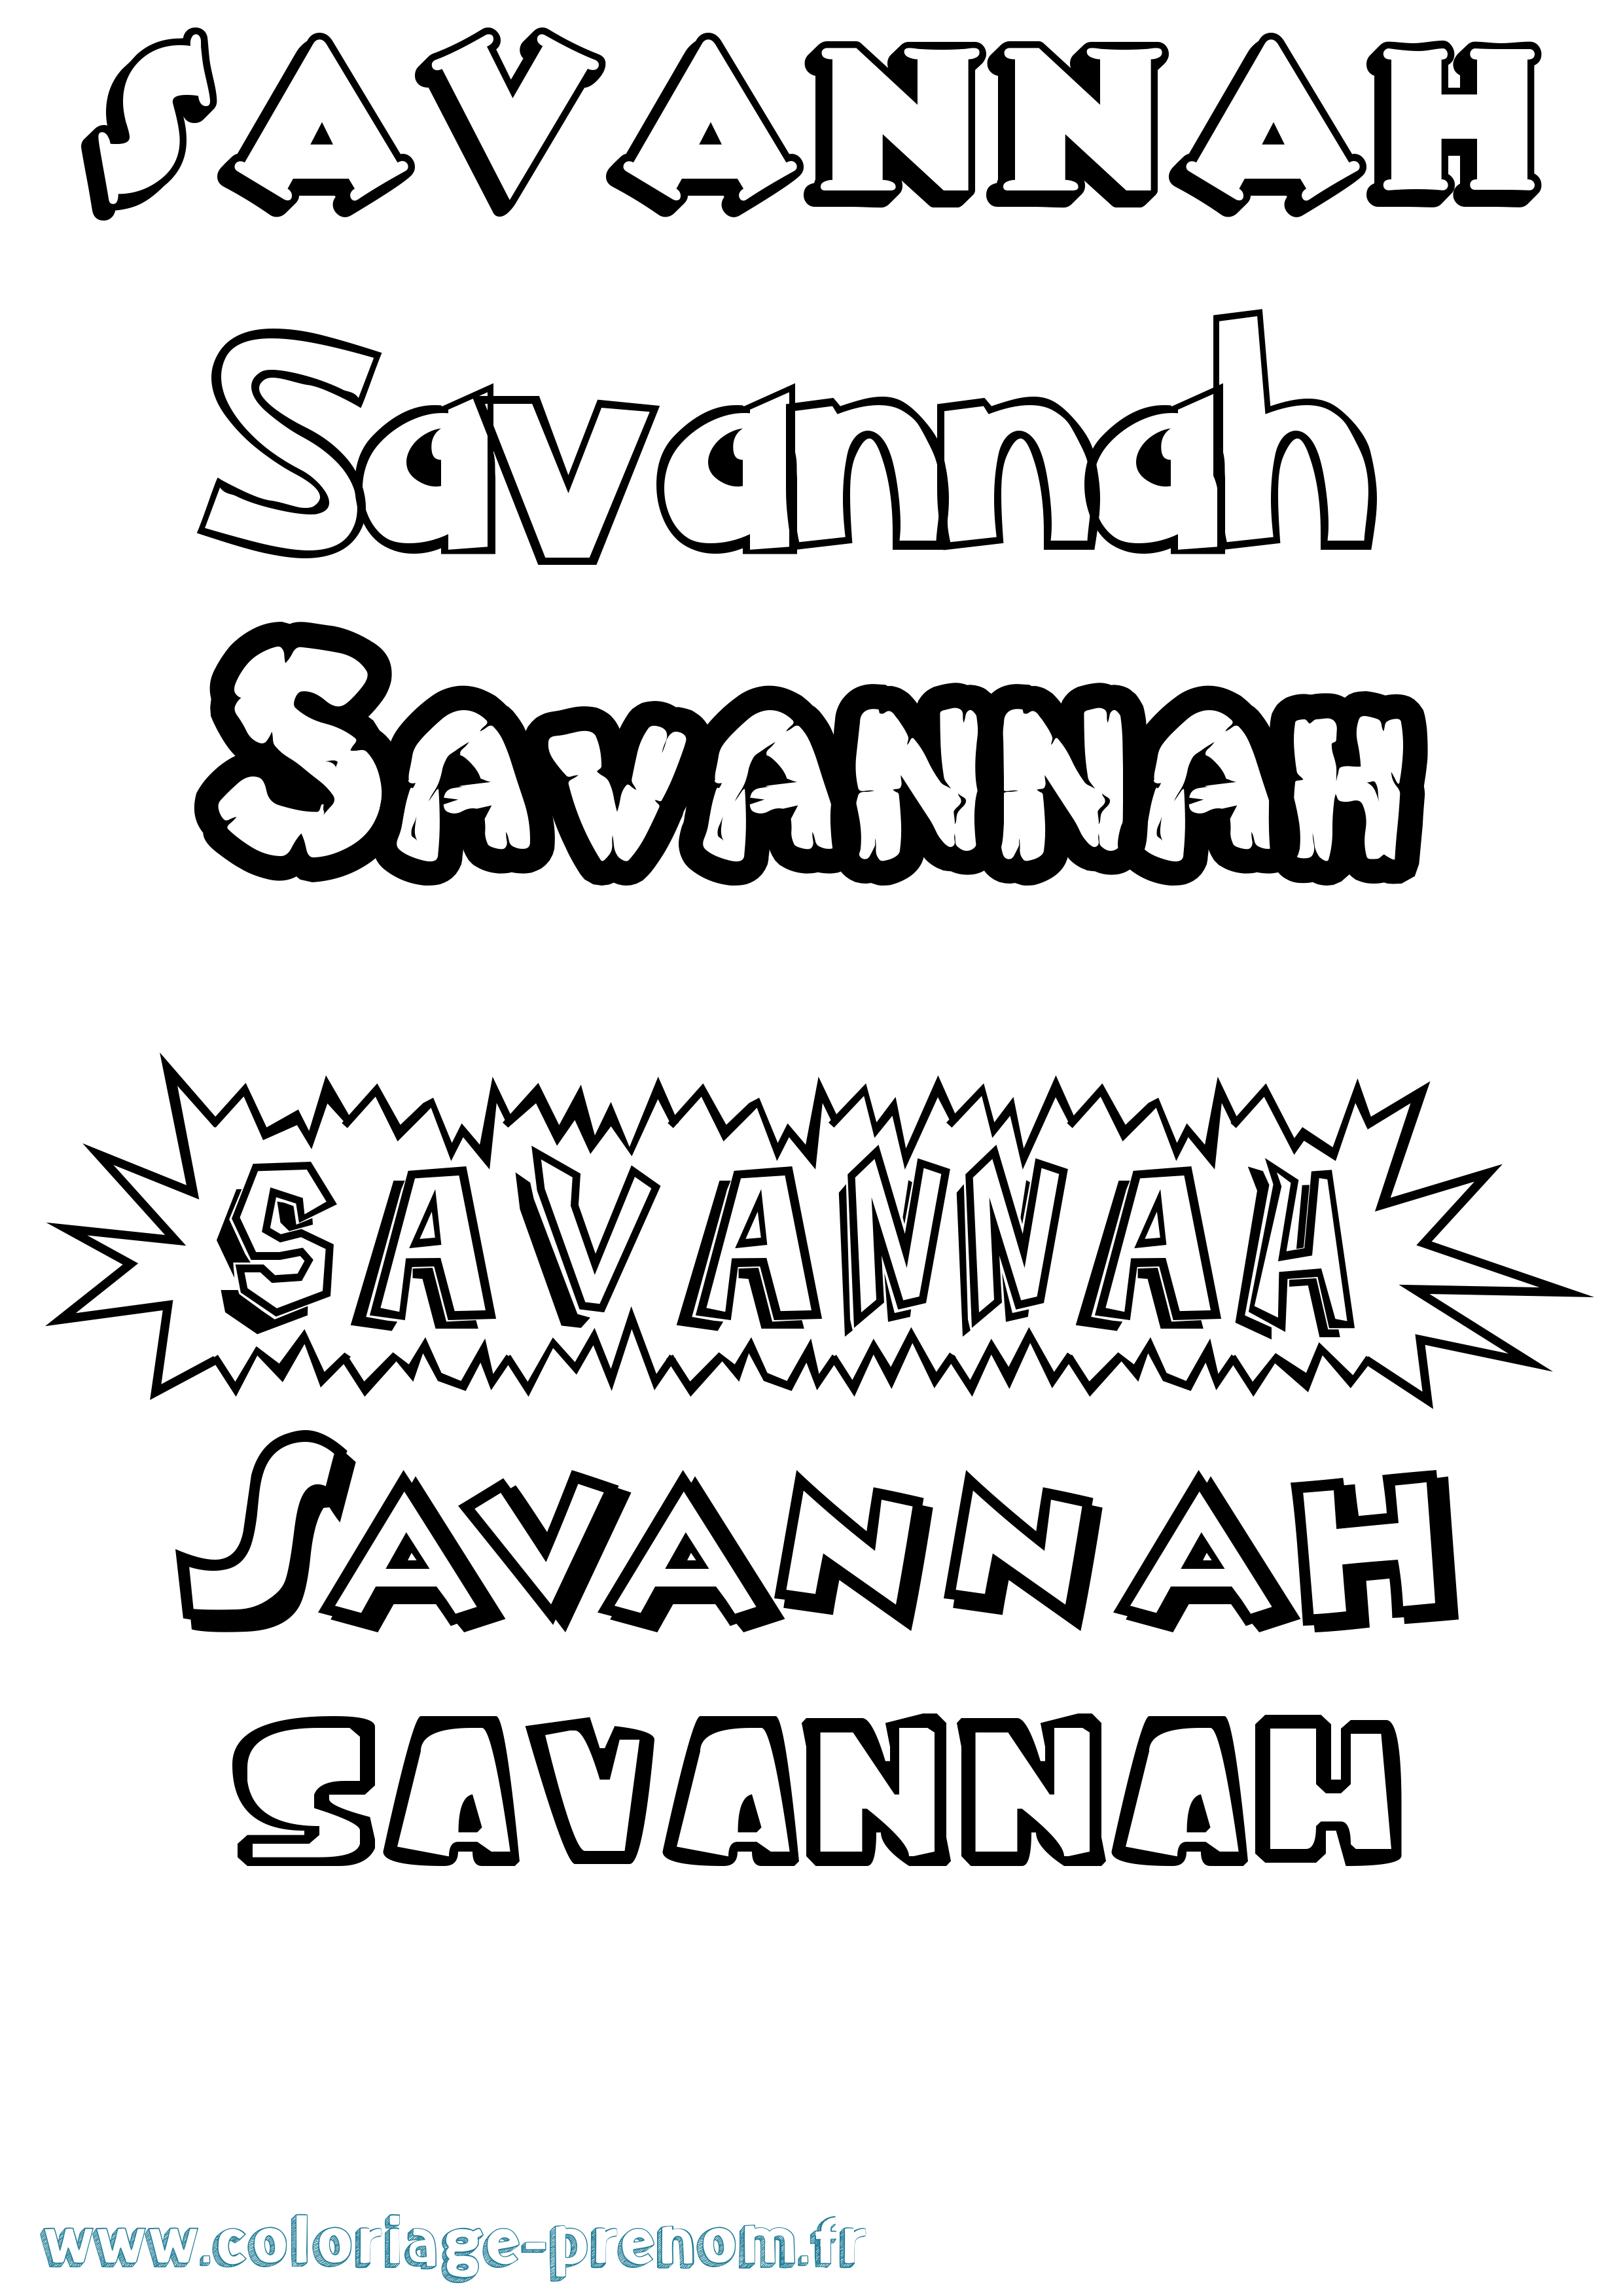 Coloriage prénom Savannah